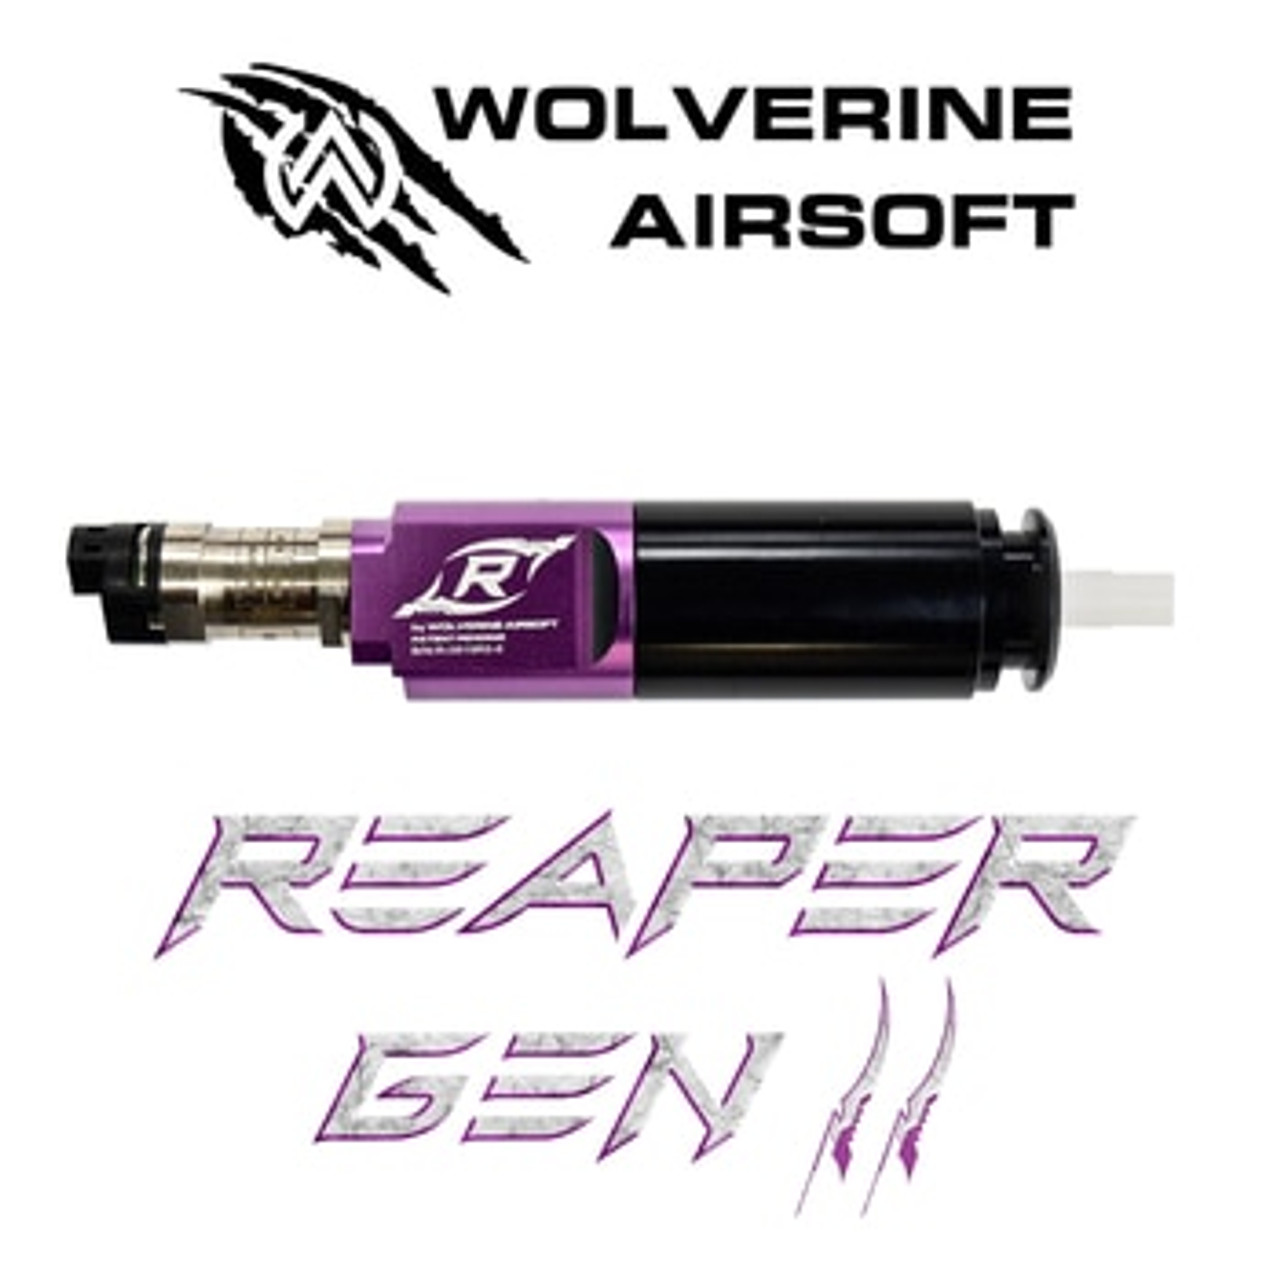 Wolverine Airsoft Reaper Gen 2 Premium  V2 Player Package